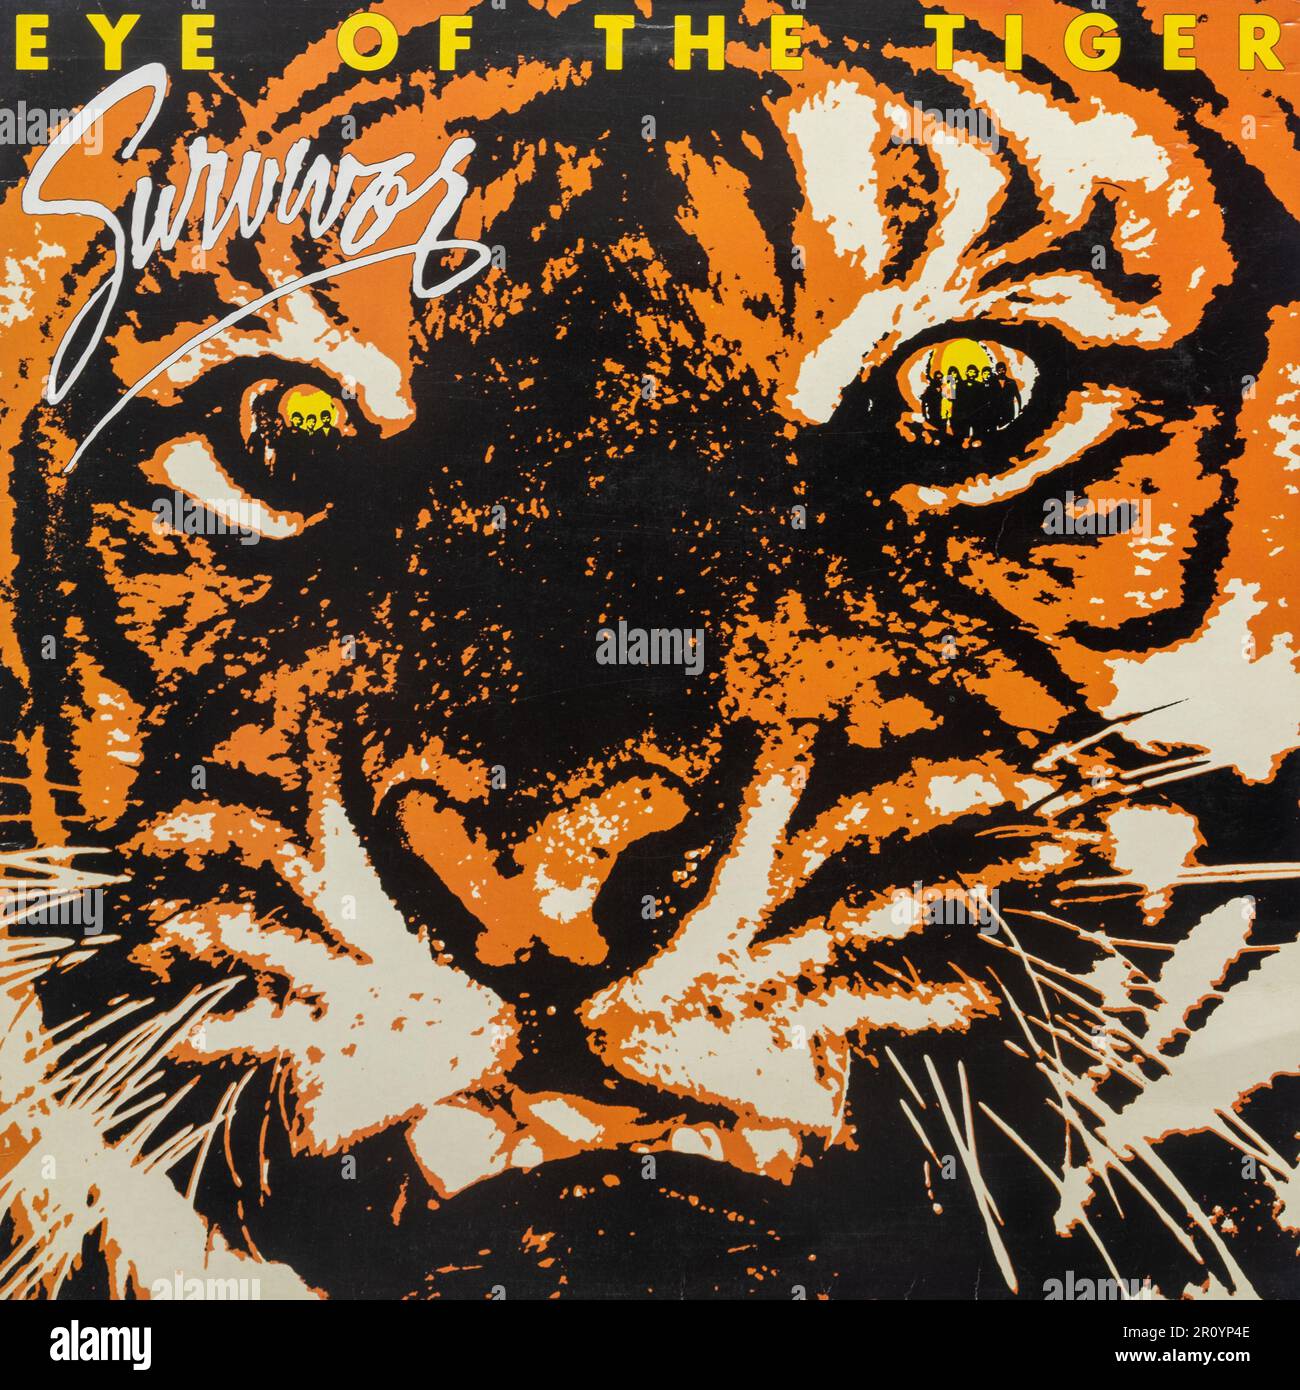 Eye of the Tiger by Survivor, vinyl record album cover Stock Photo